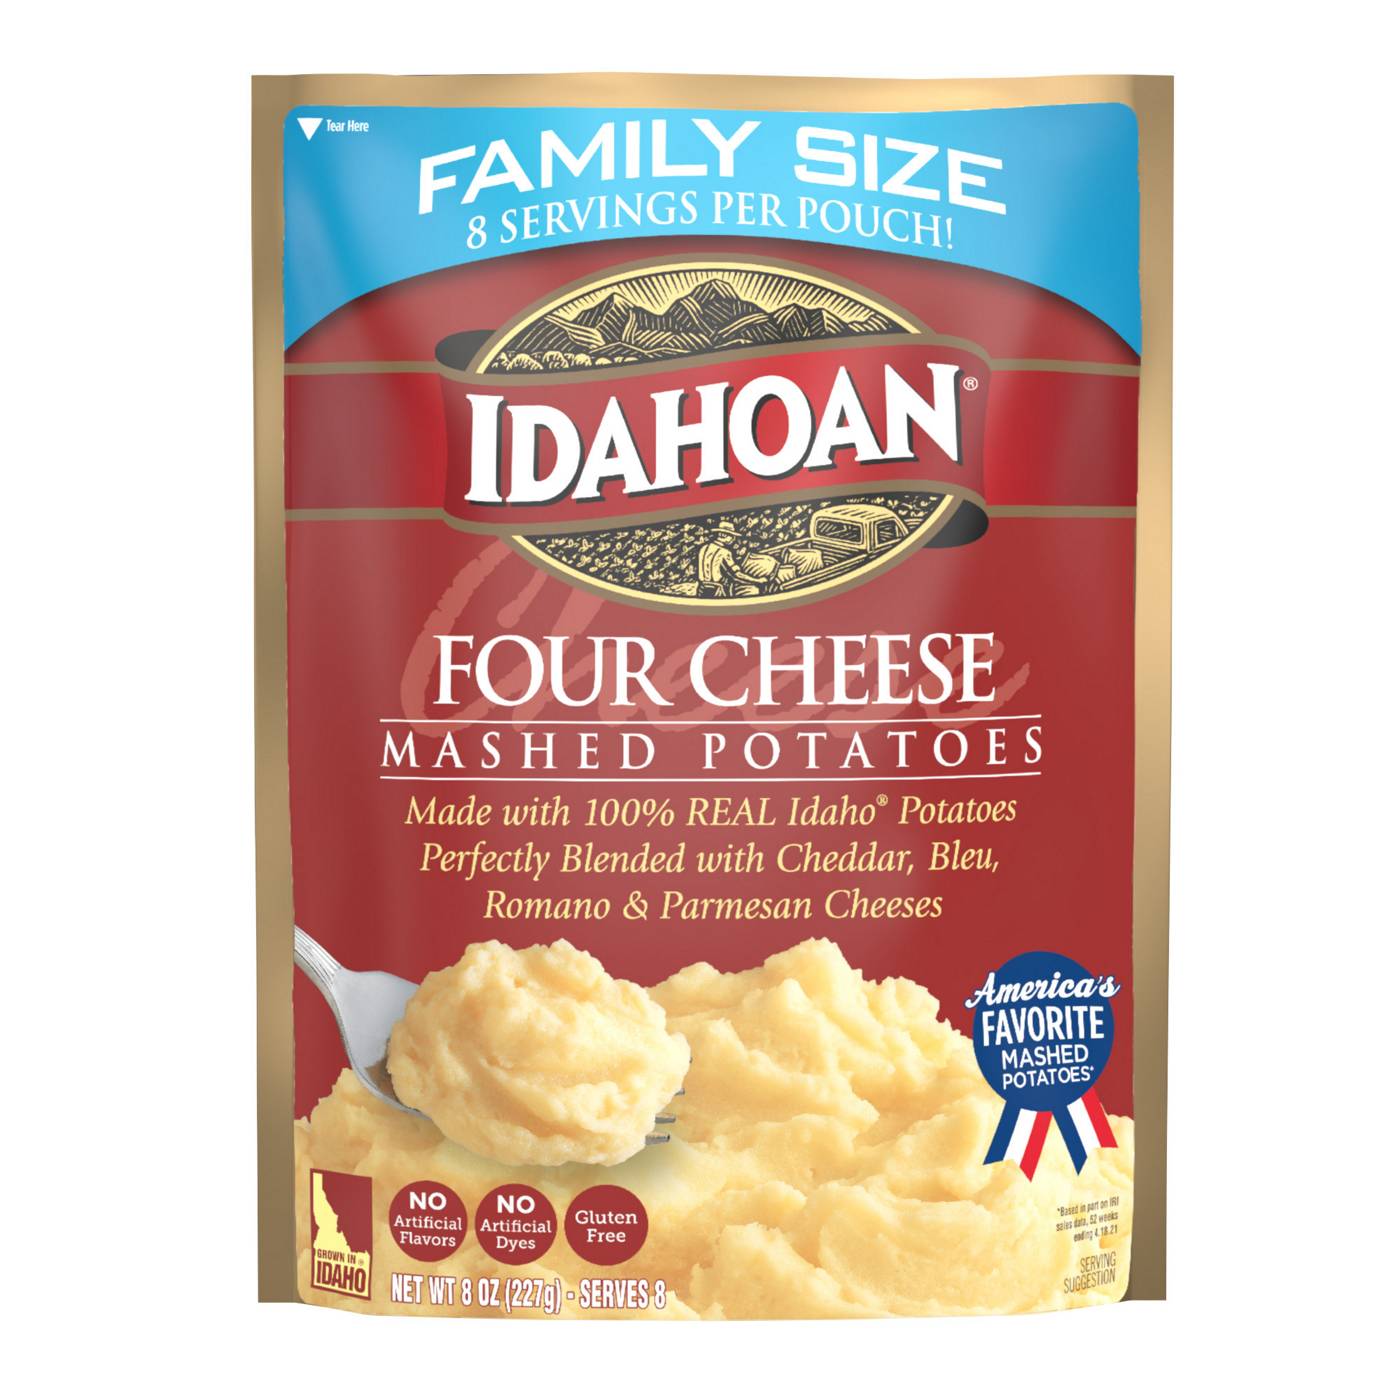 Idahoan Family Size Four Cheese Mashed Potatoes; image 1 of 5